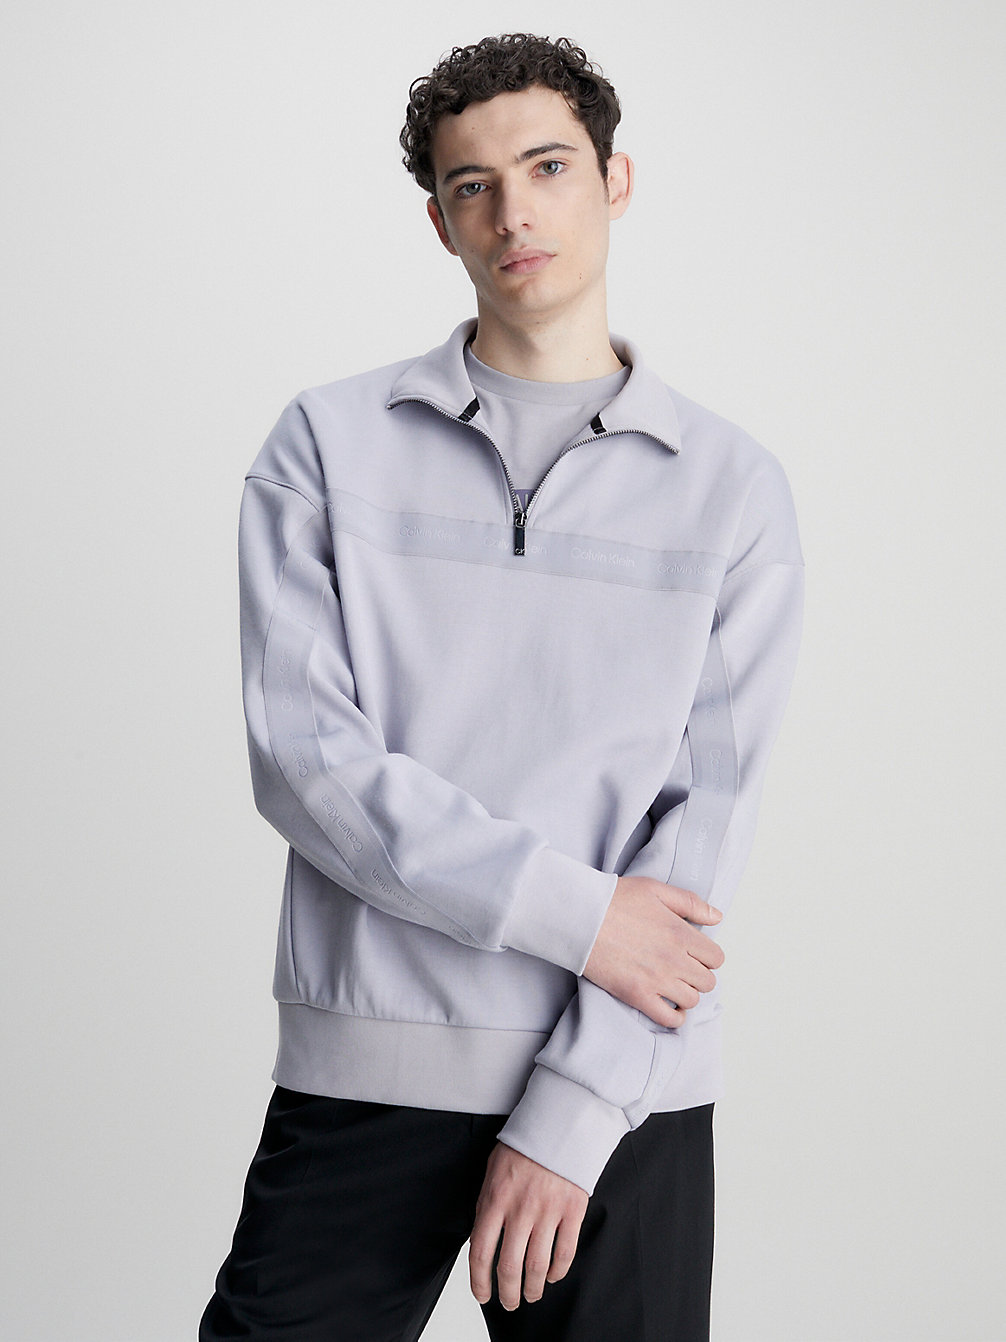 DAPPLE GRAY Zip Neck Sweatshirt undefined men Calvin Klein